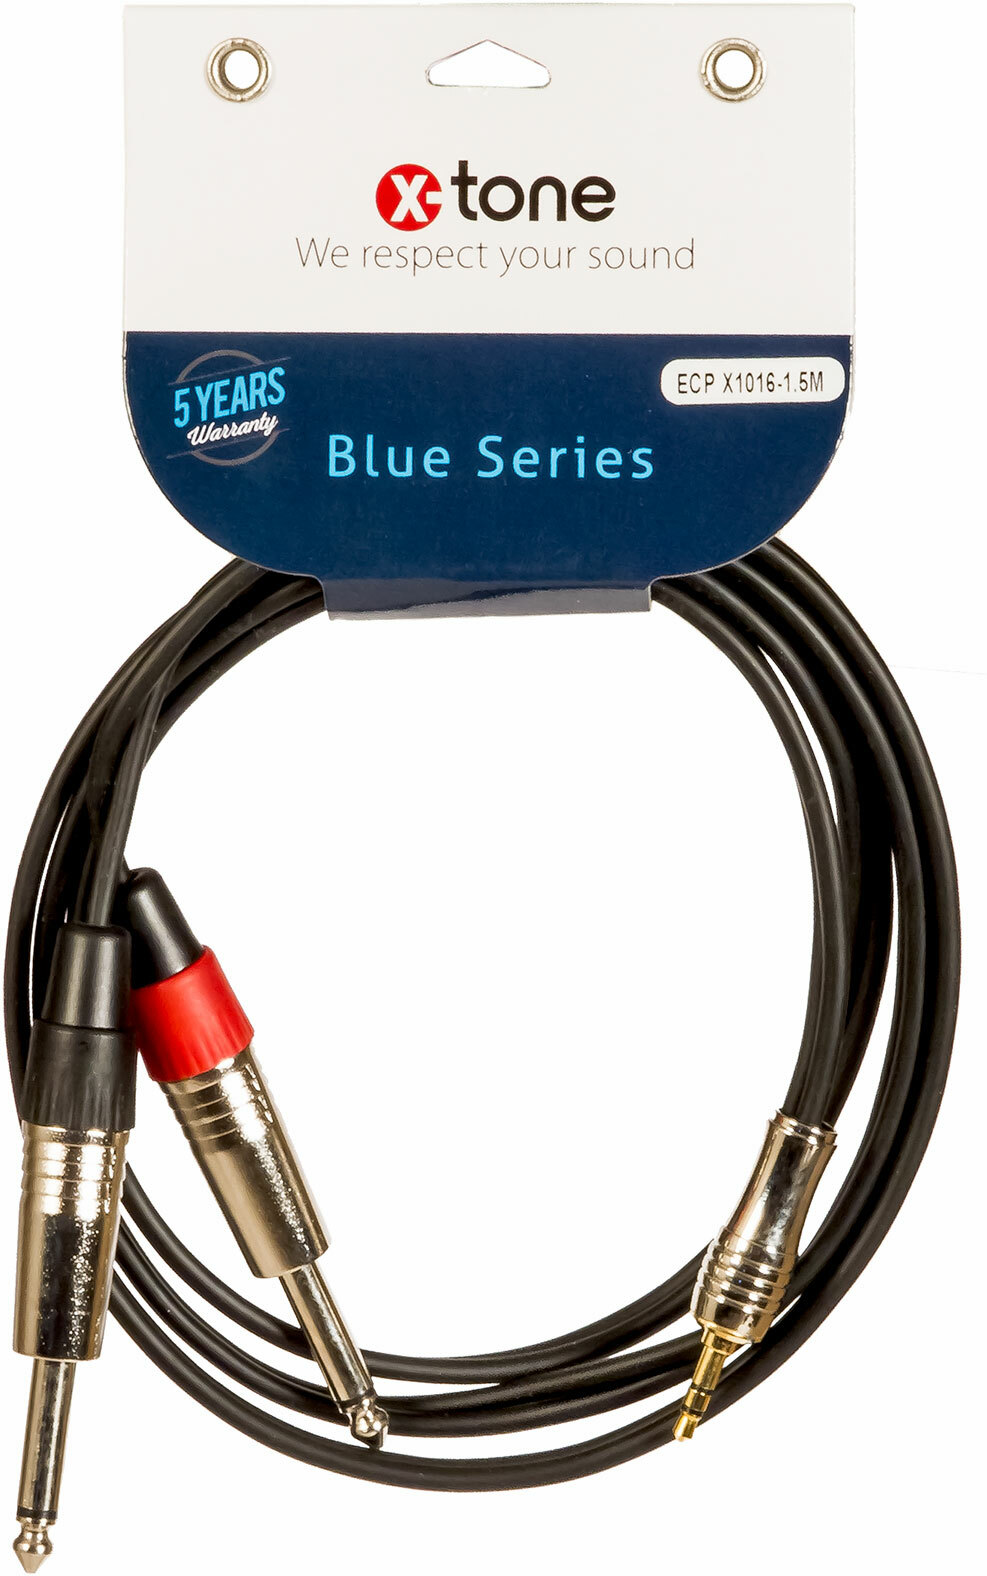 X-tone Mini Jack St / 2 Jack 1.5m Blue Series (x1016-1.5m) - Kabel - Main picture